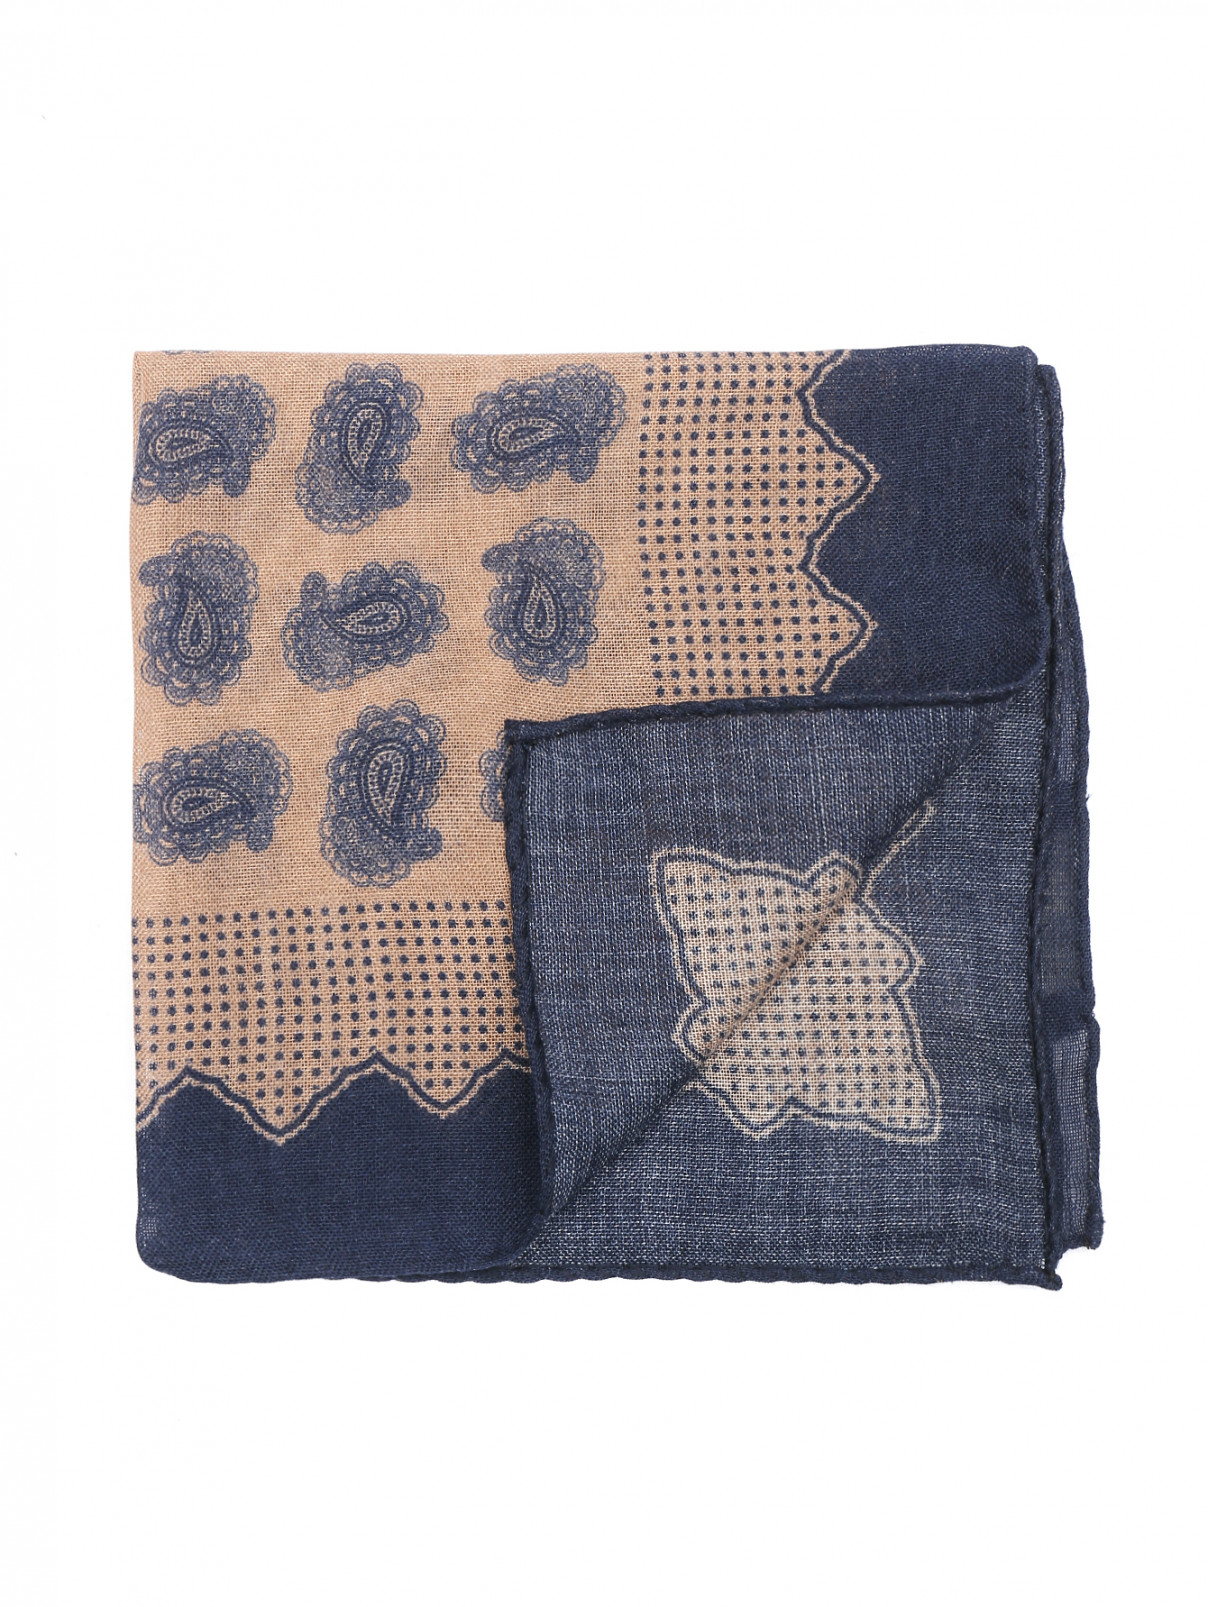 Карманный платок из шерсти с узором LARDINI  –  Общий вид  – Цвет:  Синий